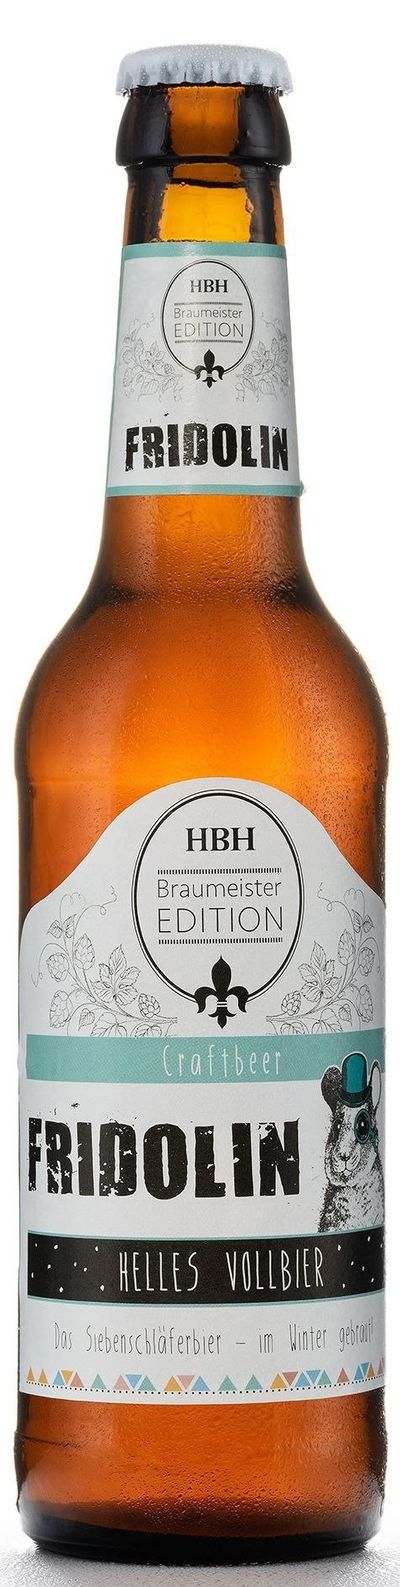 HBH Fridolin helles Vollbier 0,33l Flasche